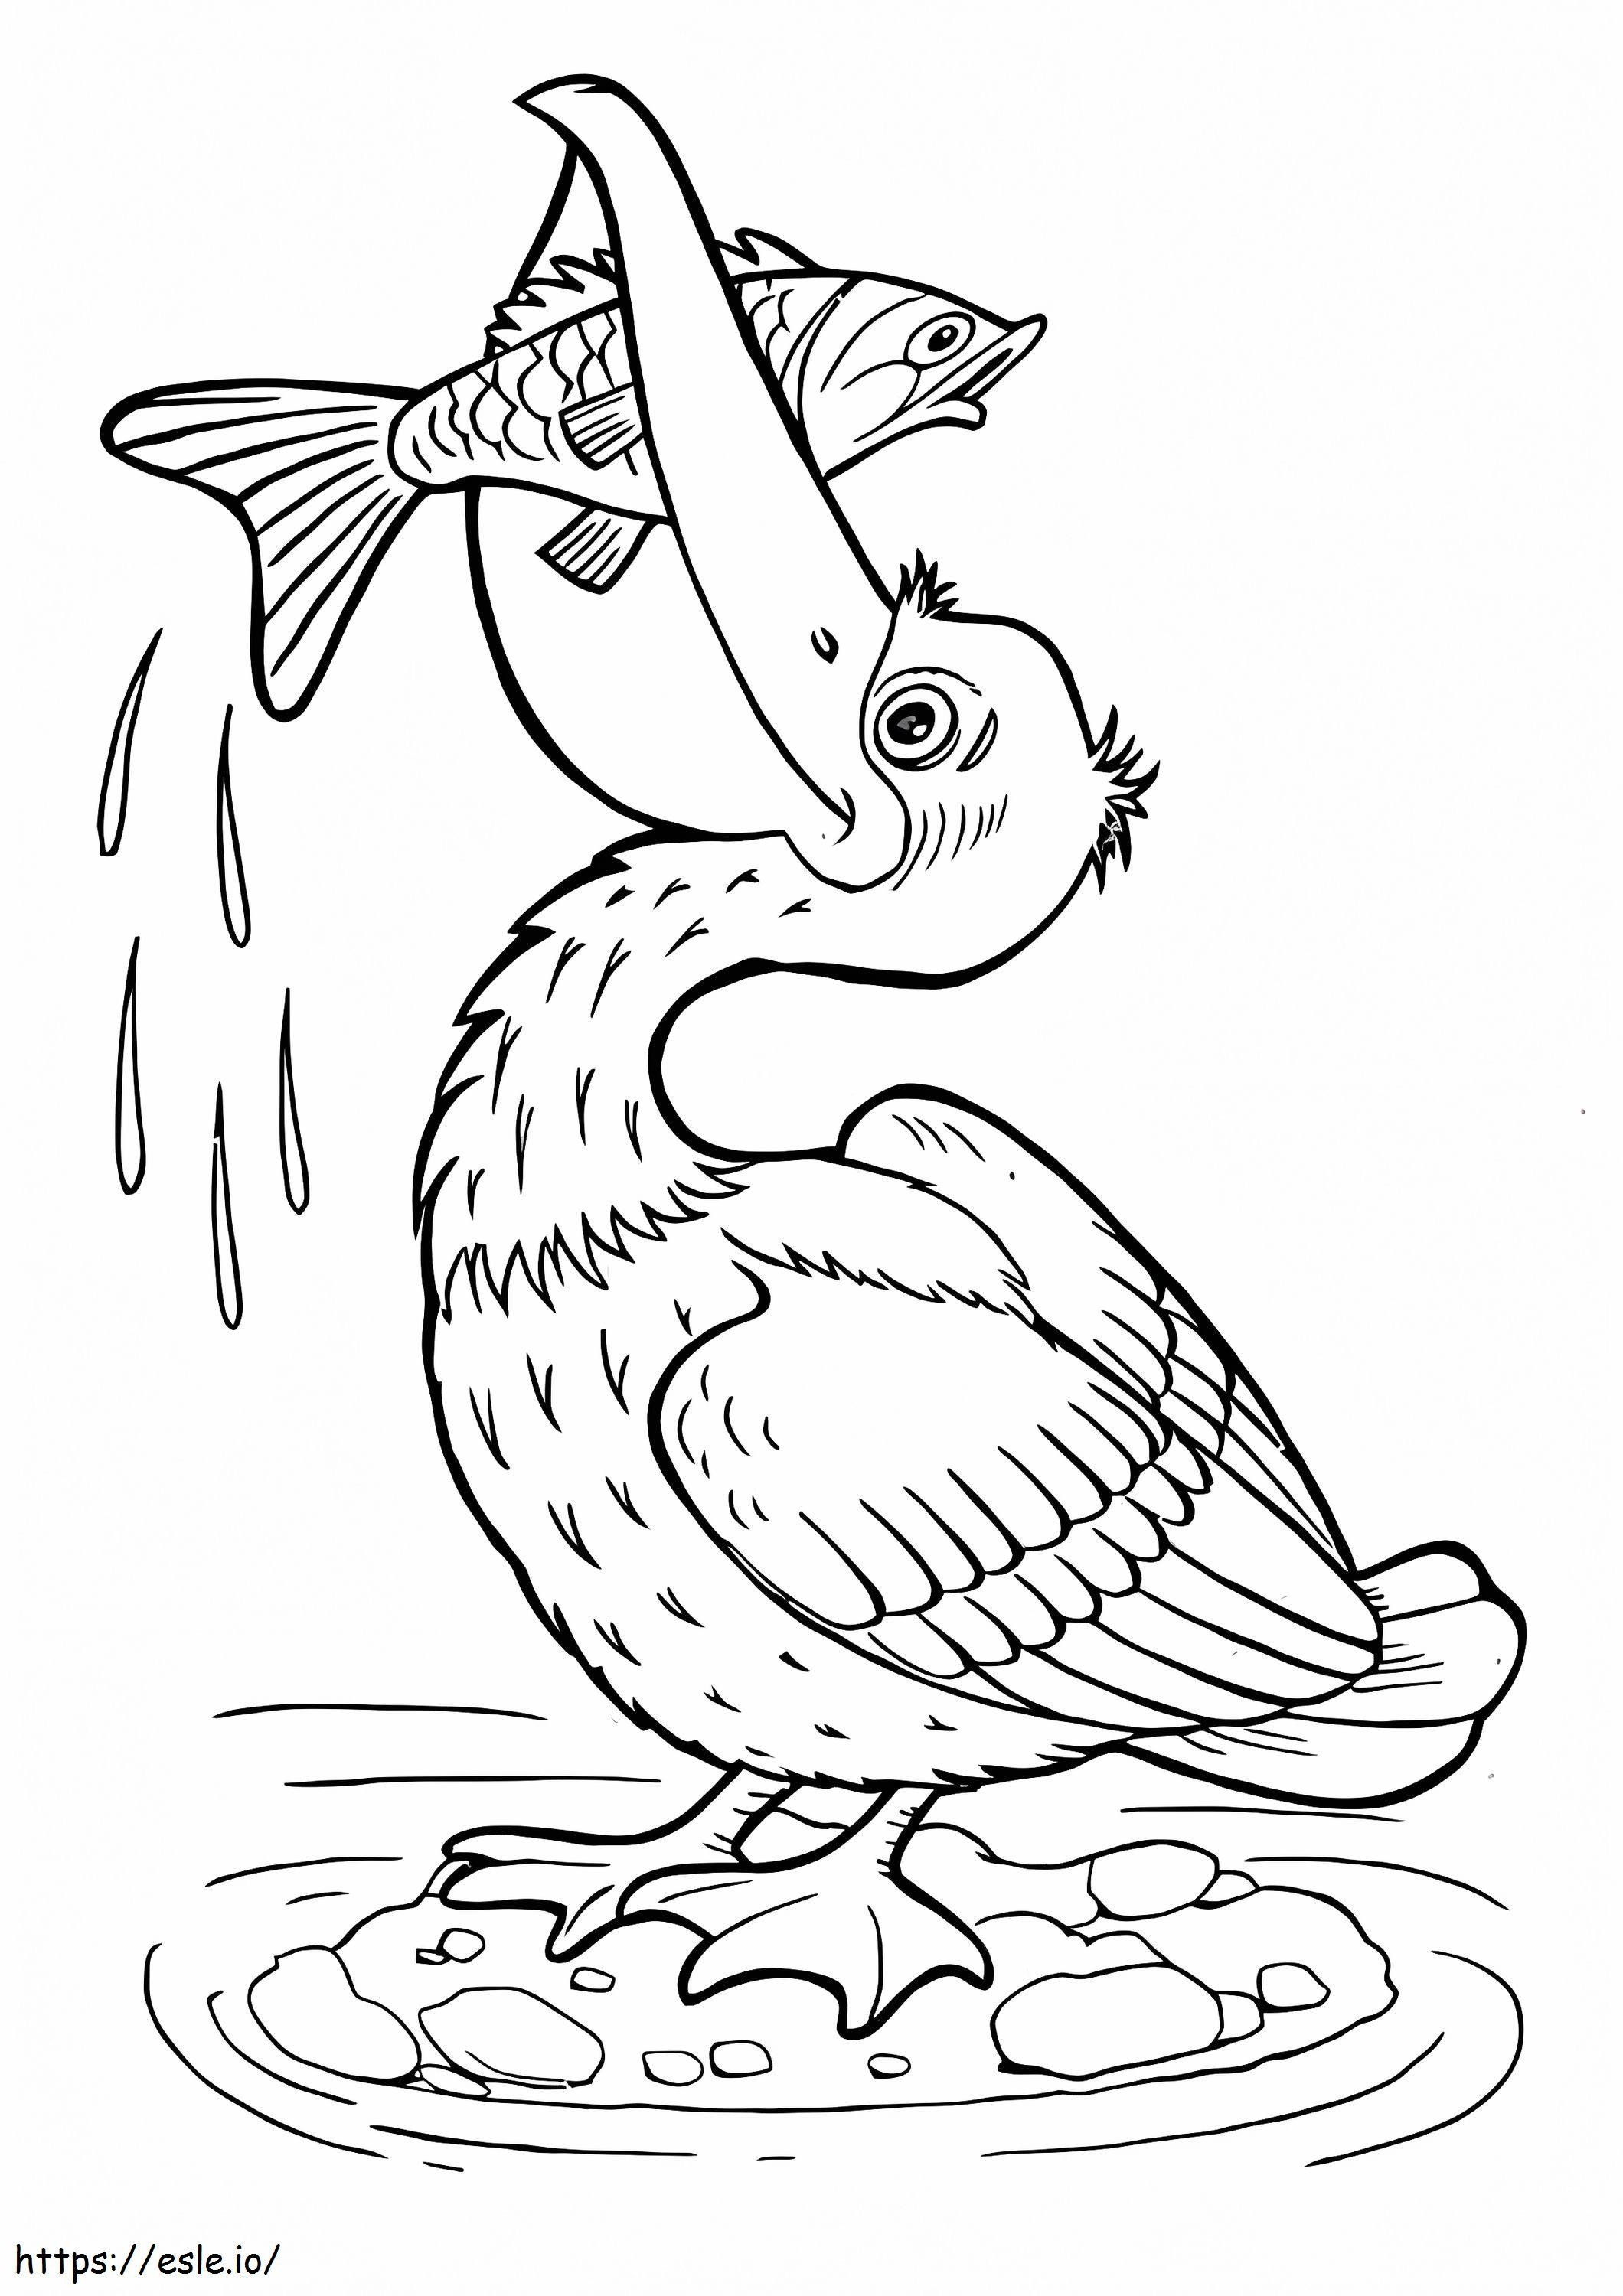 Pelicano básico comendo peixe para colorir